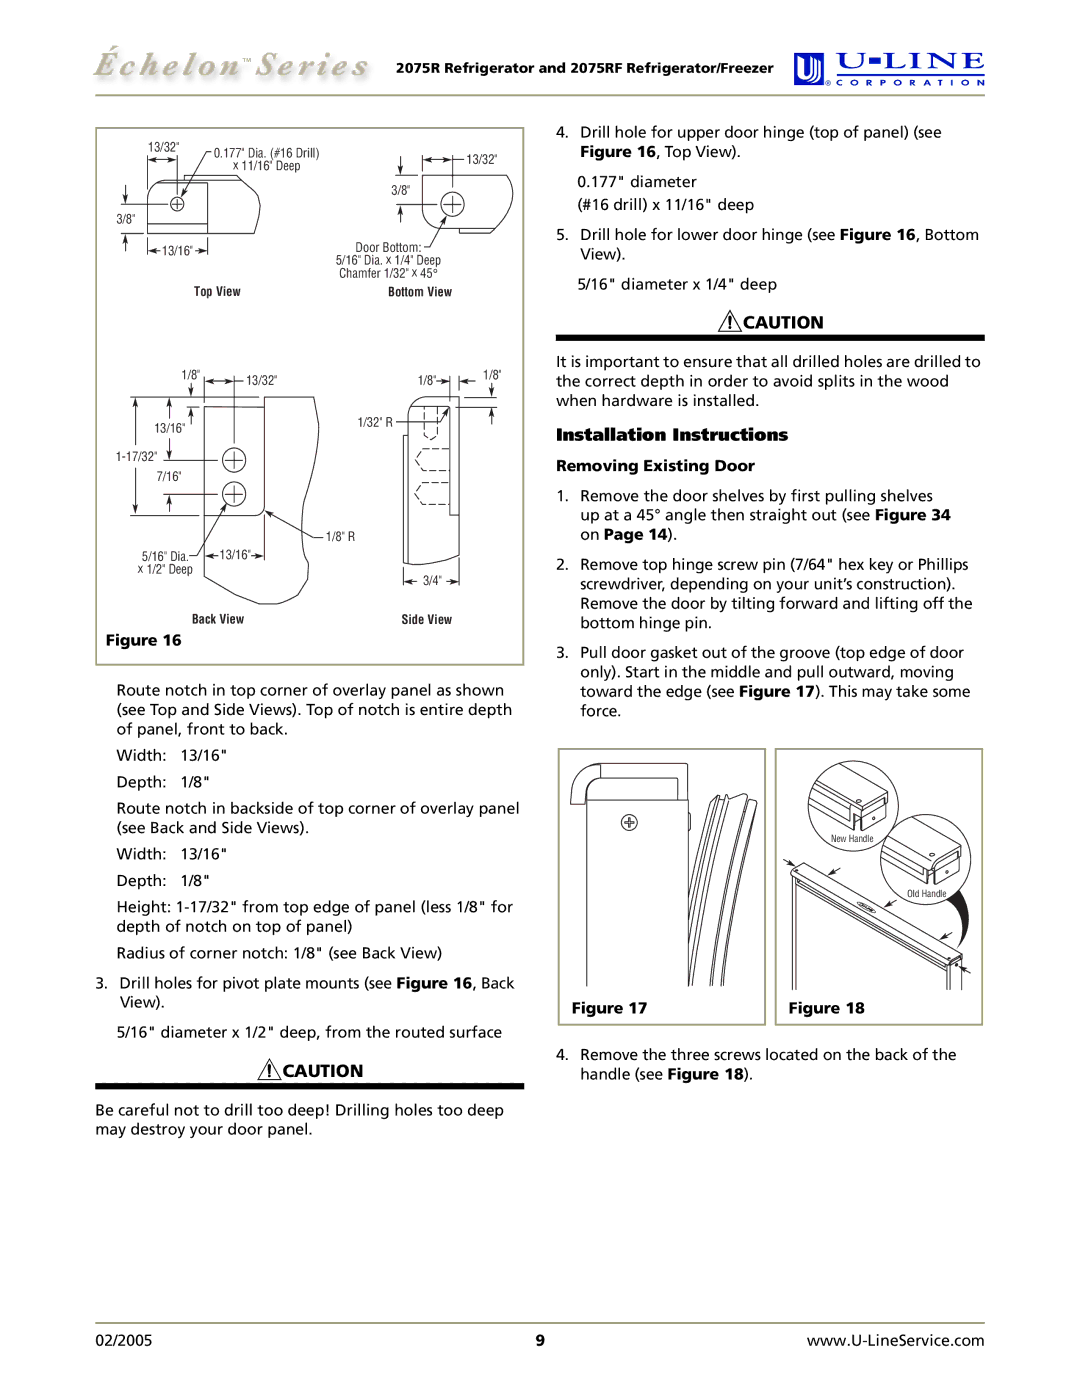 U-Line 2075RF manual Installation Instructions, Removing Existing Door 